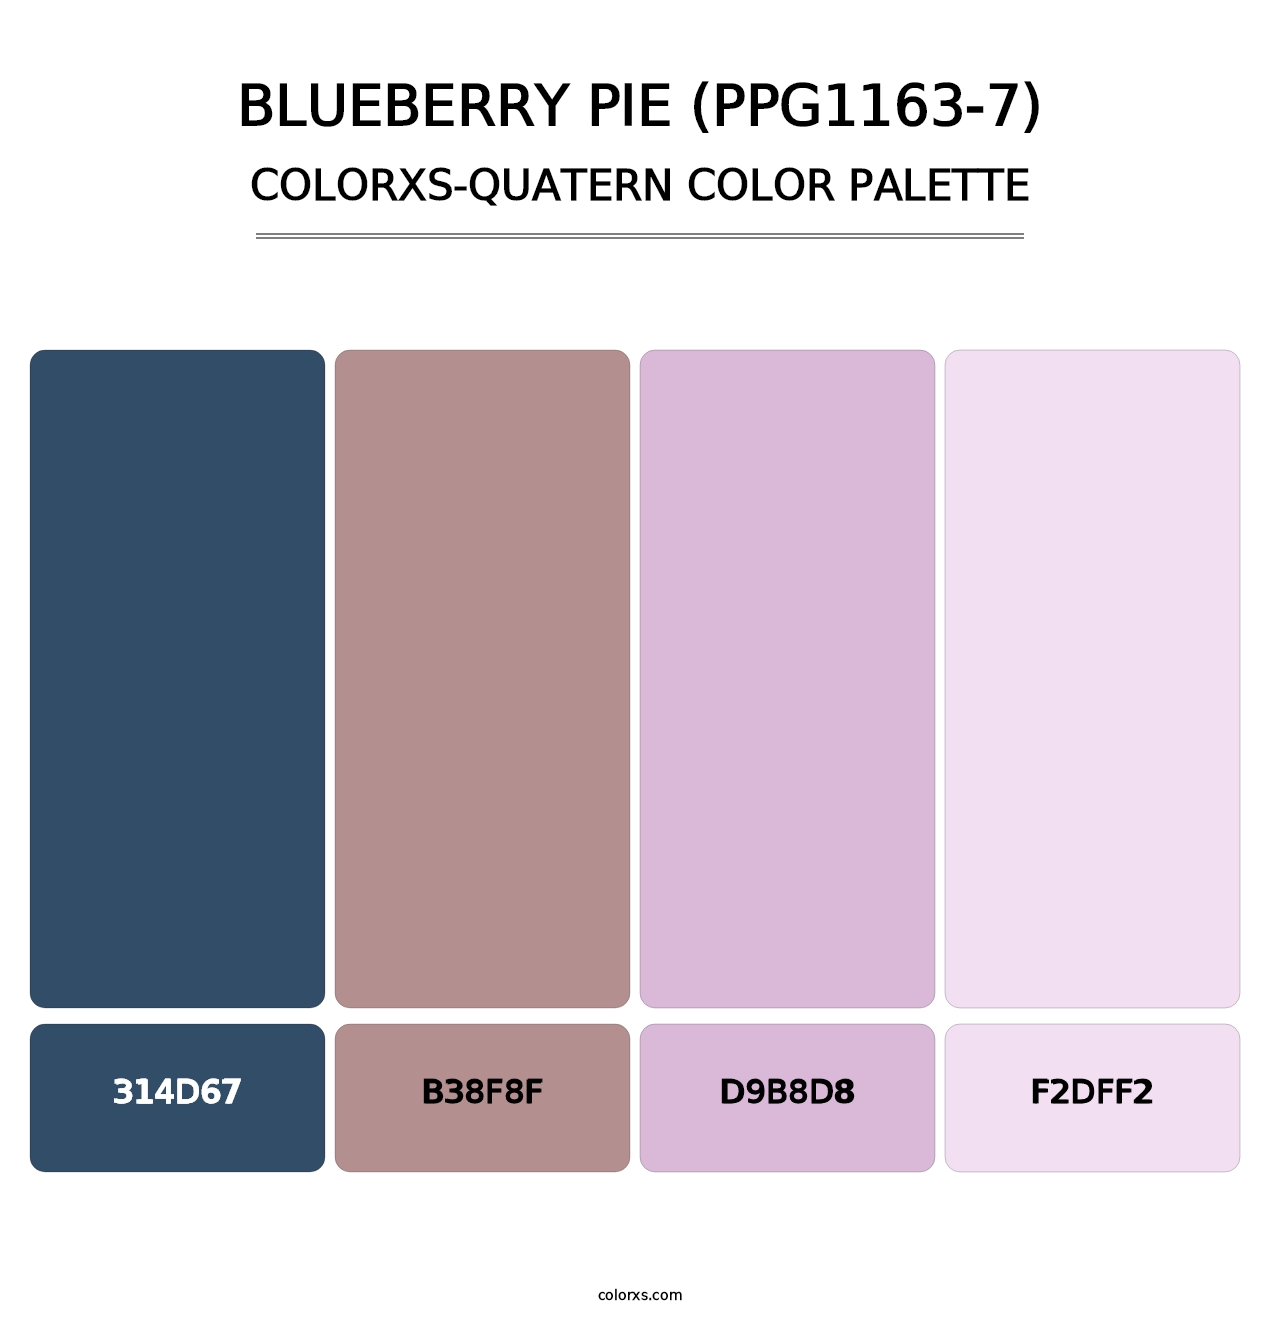 Blueberry Pie (PPG1163-7) - Colorxs Quatern Palette